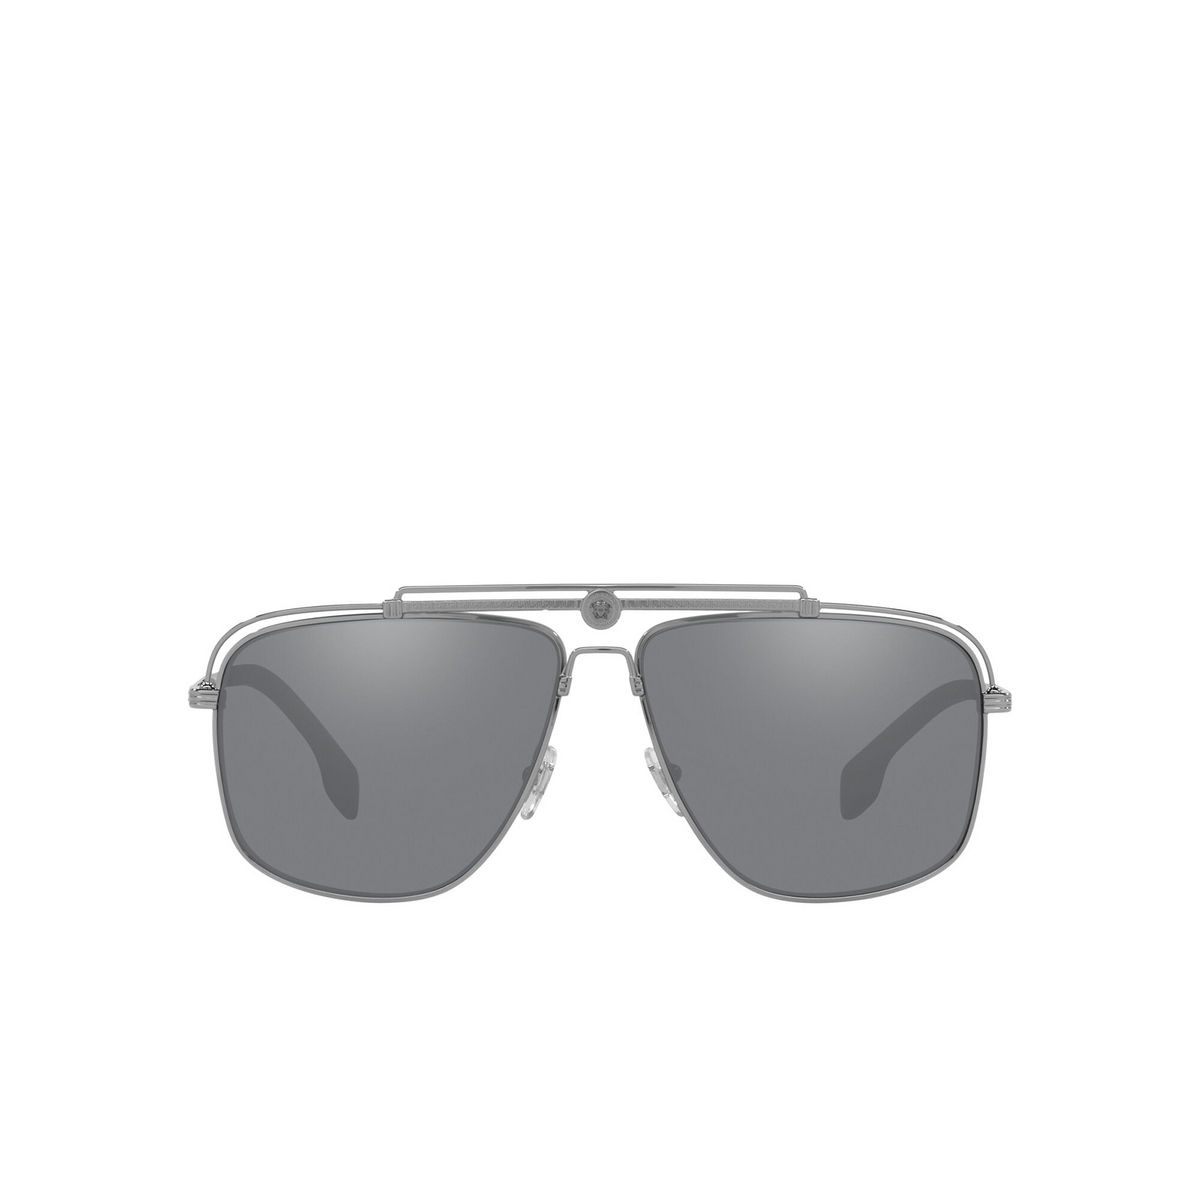 Versace® Square Sunglasses: VE2242 color Gunmetal 10016G - front view.